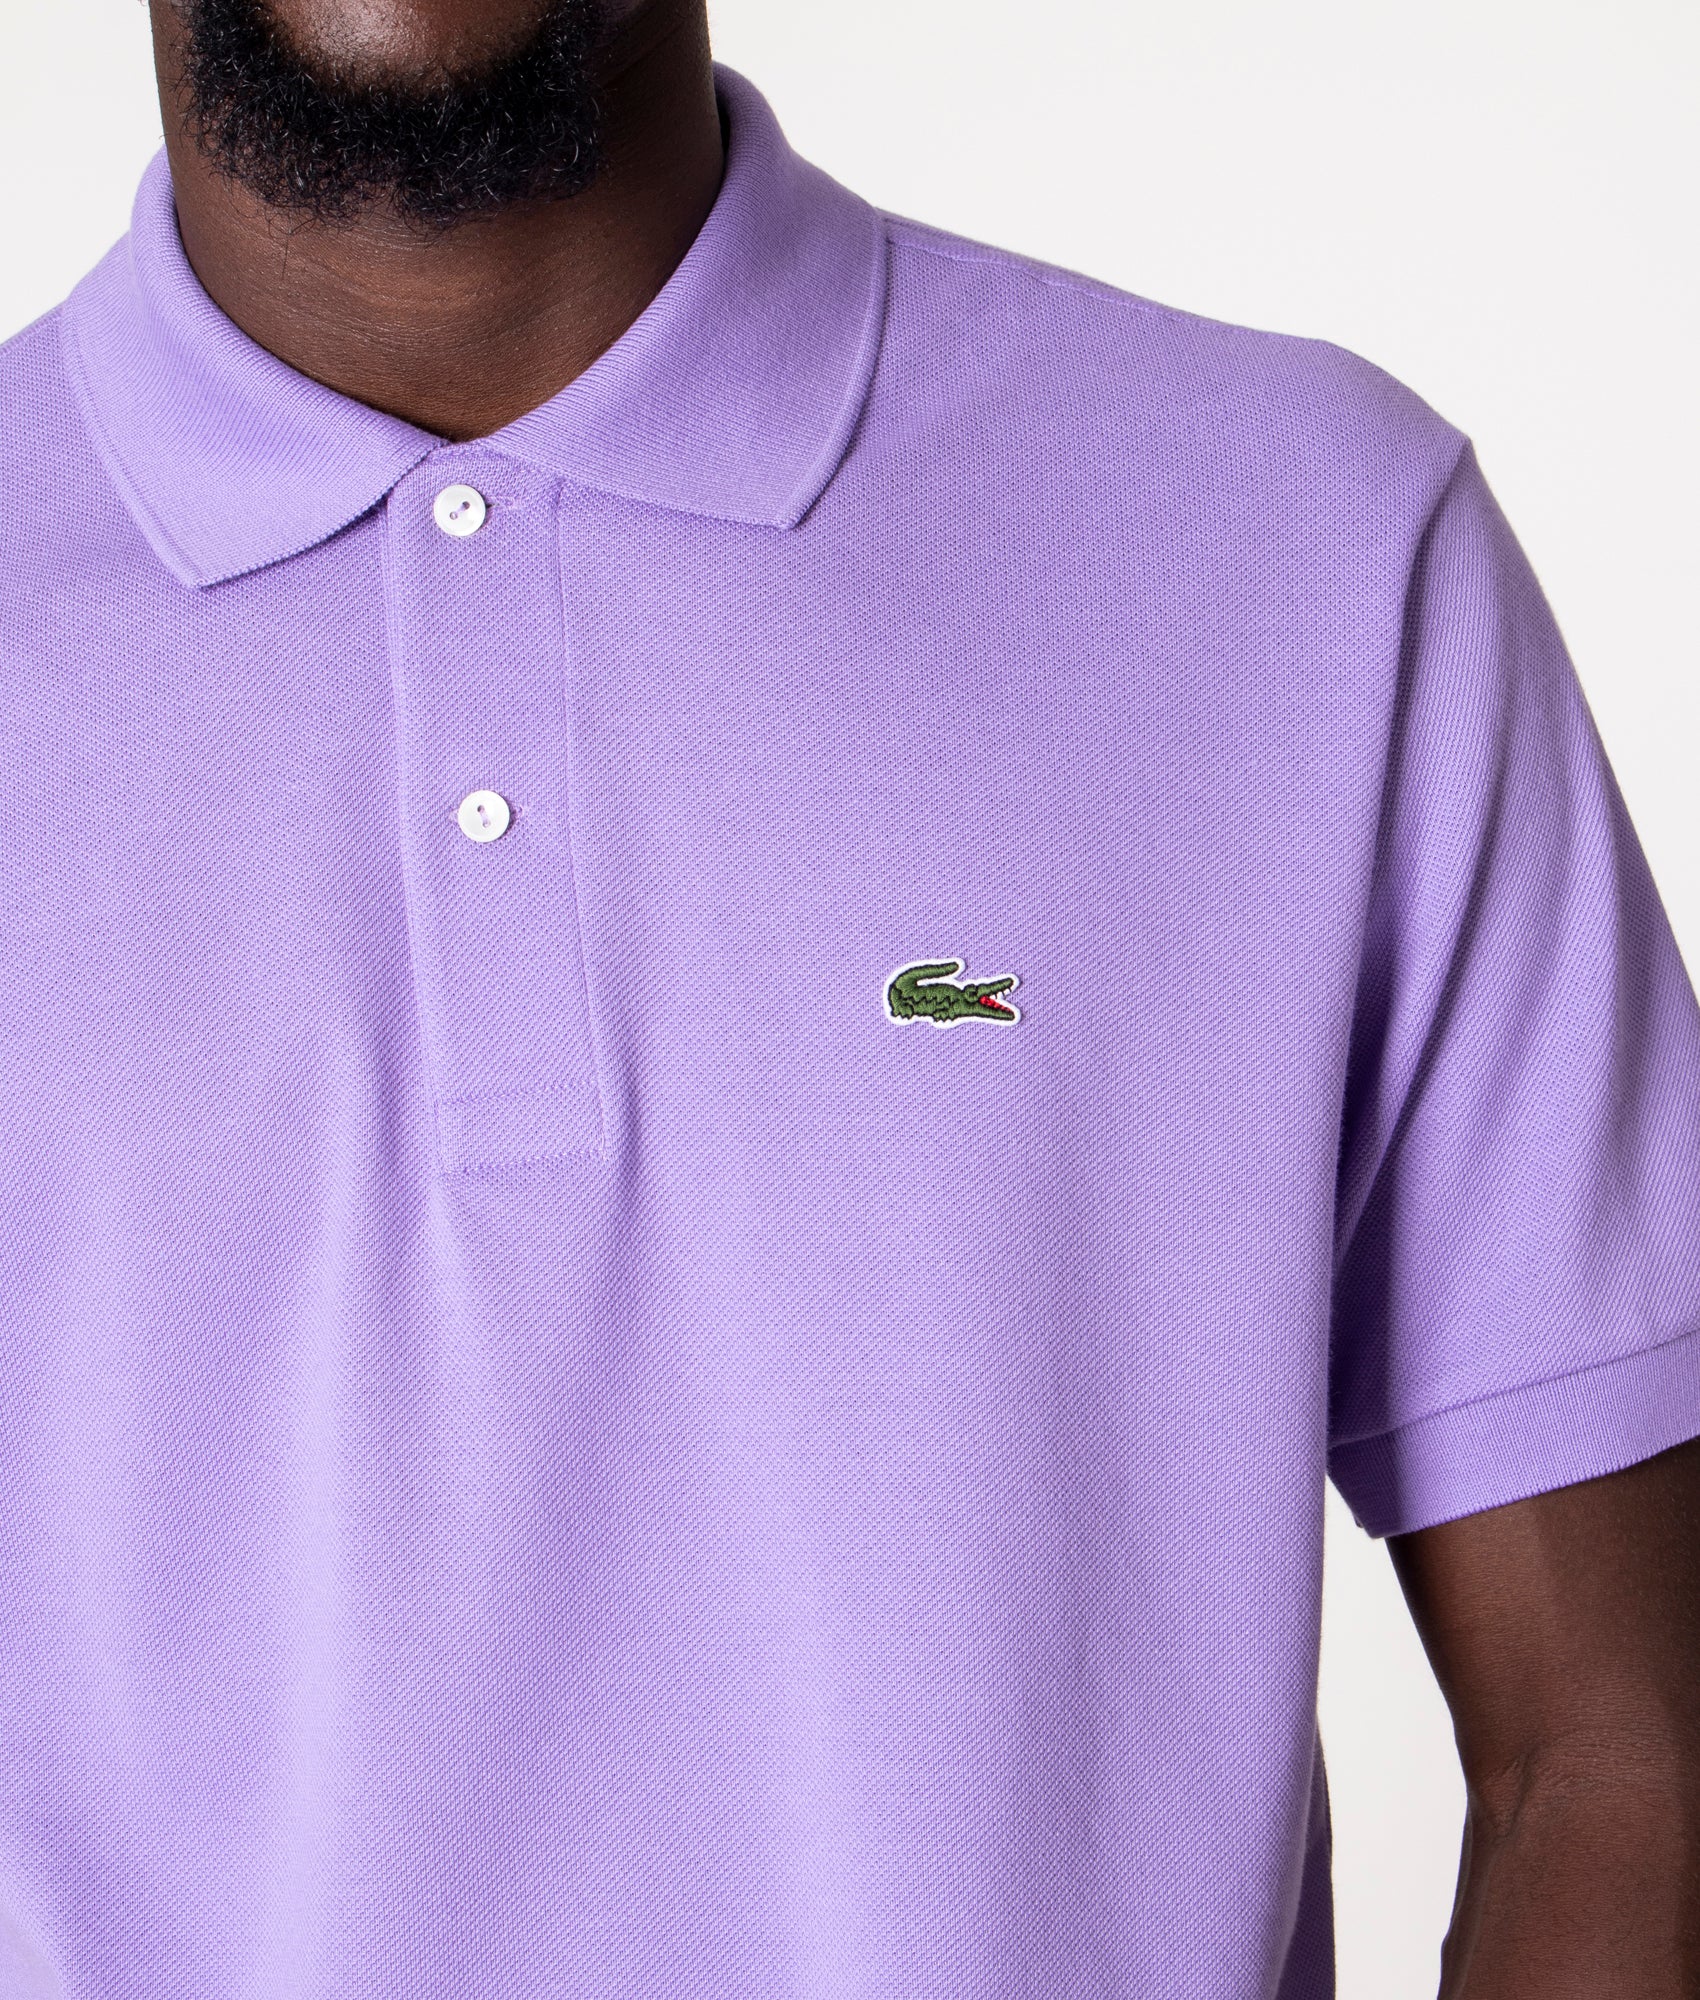 EQVVS Lacoste Purple | Shirt Logo Polo Croc Relaxed Neva L1212 | Fit